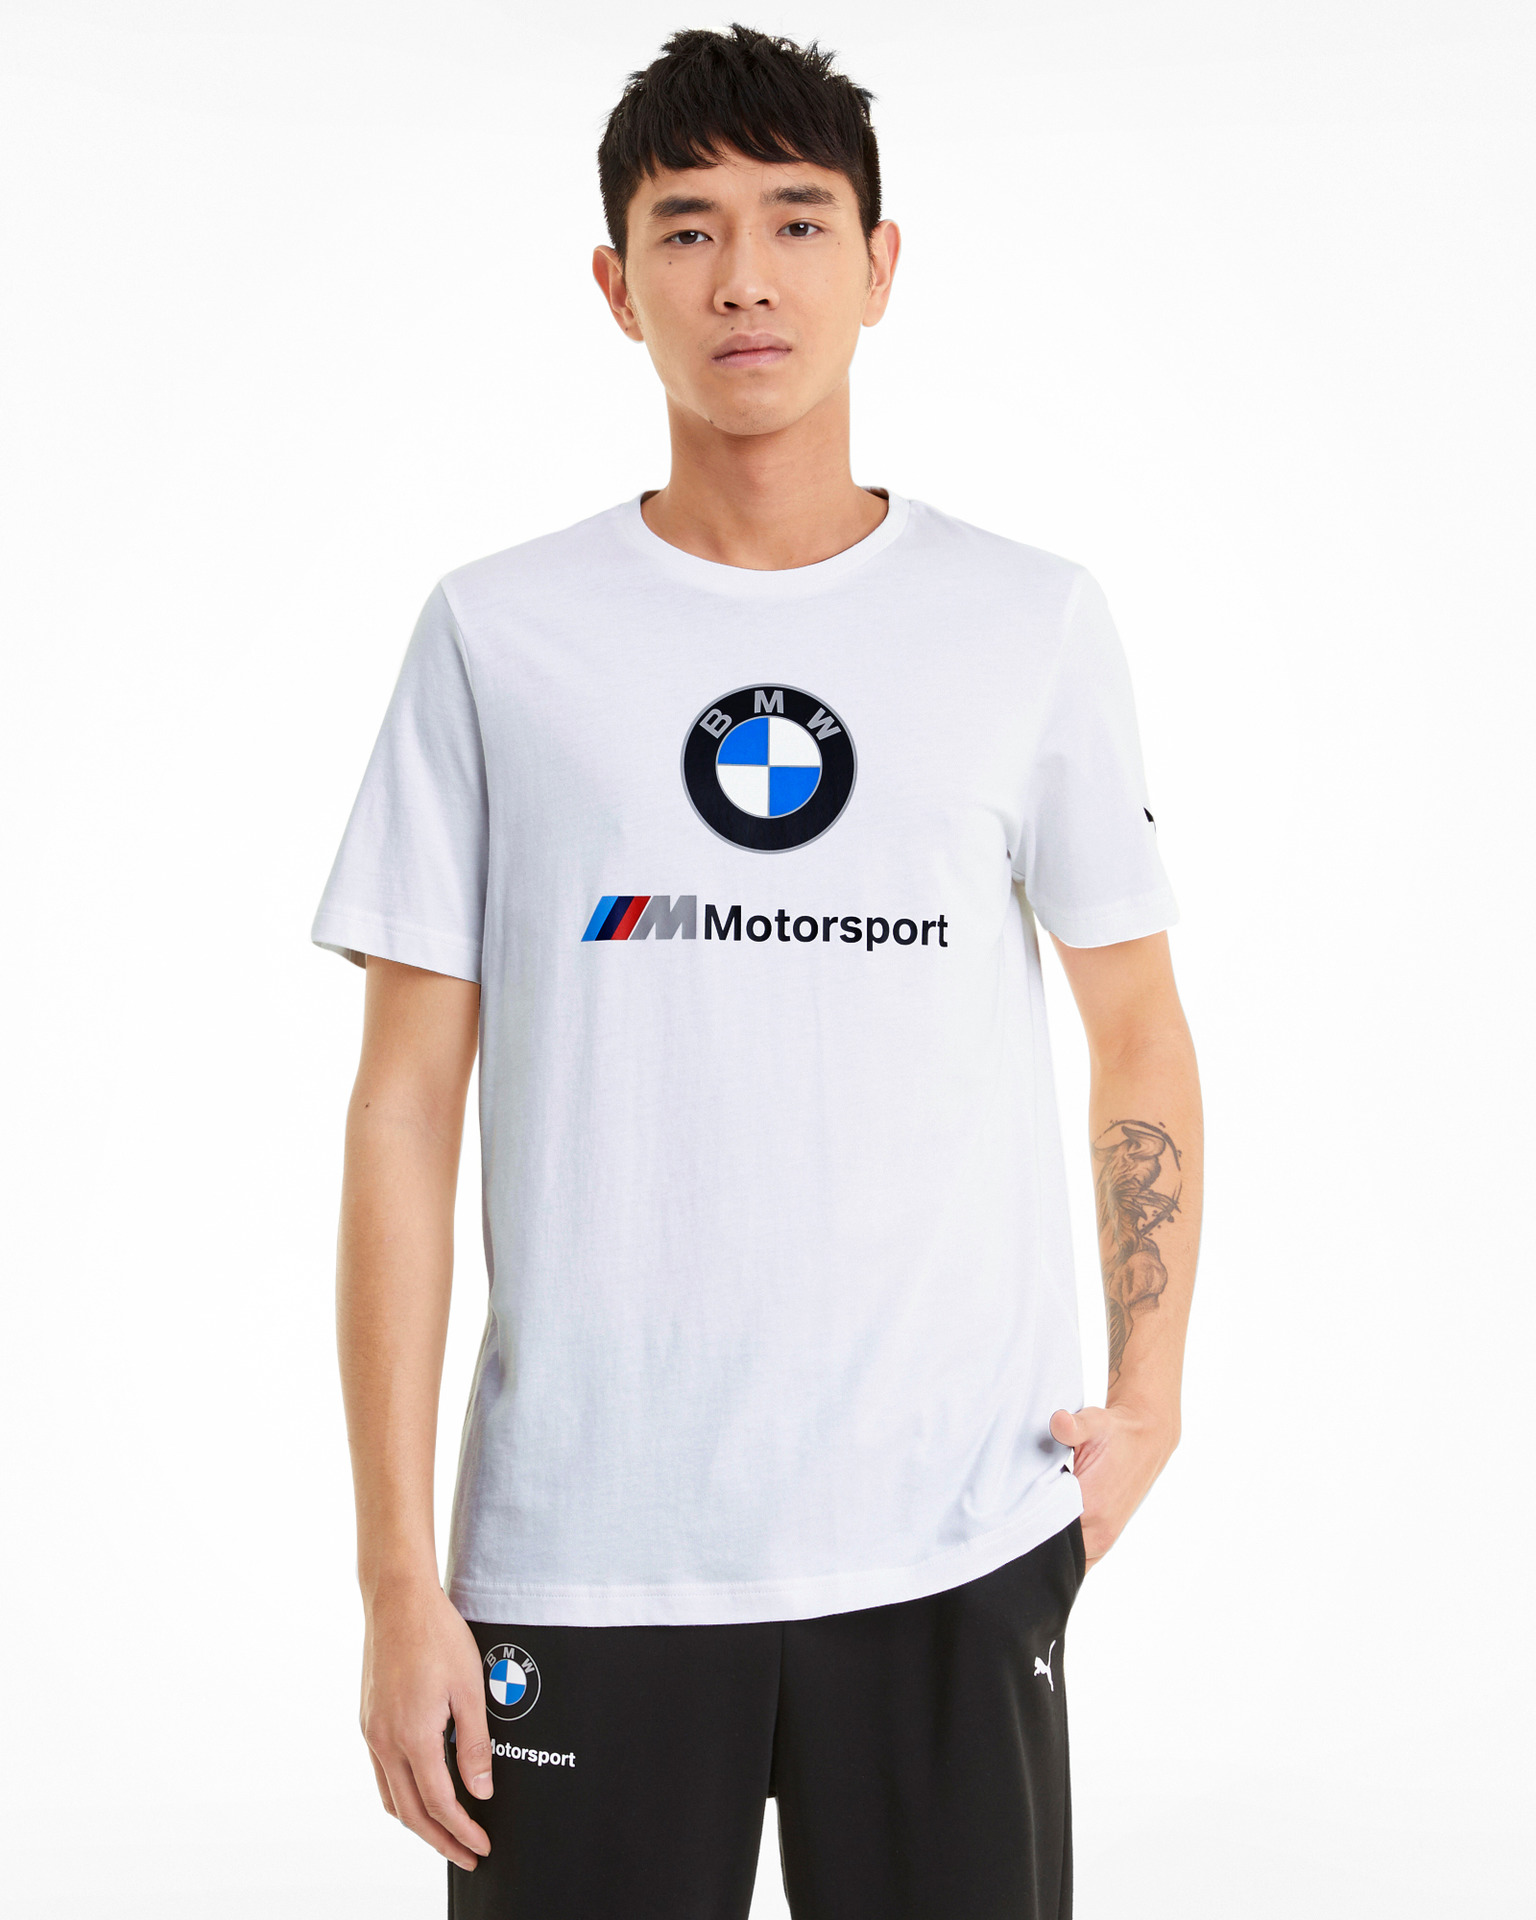 M Motorsport T-shirt